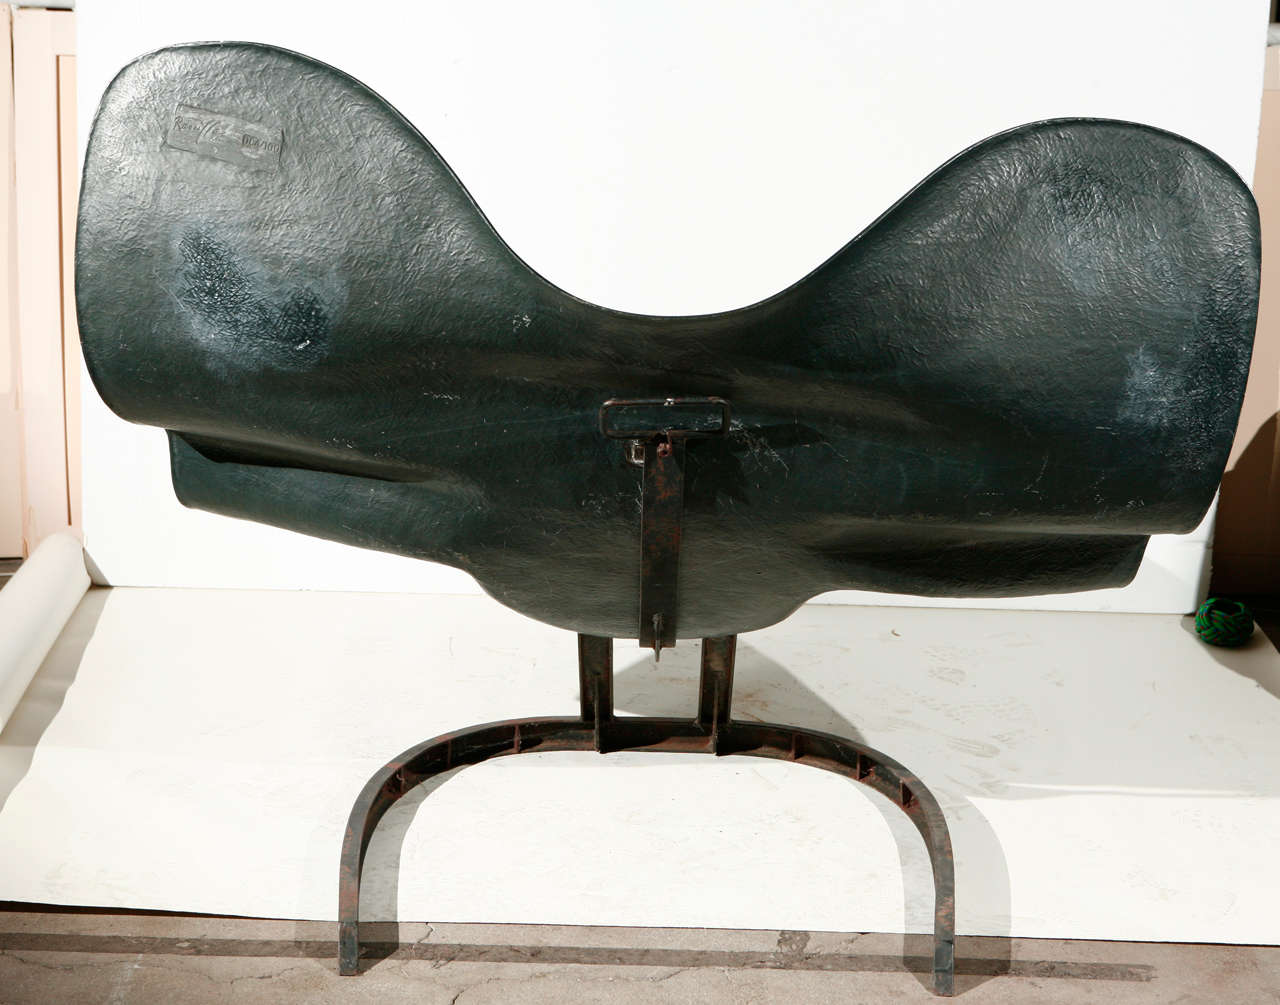 Elephant Chair by Bernard Rancillac, designed 1966 and produced 1980s.